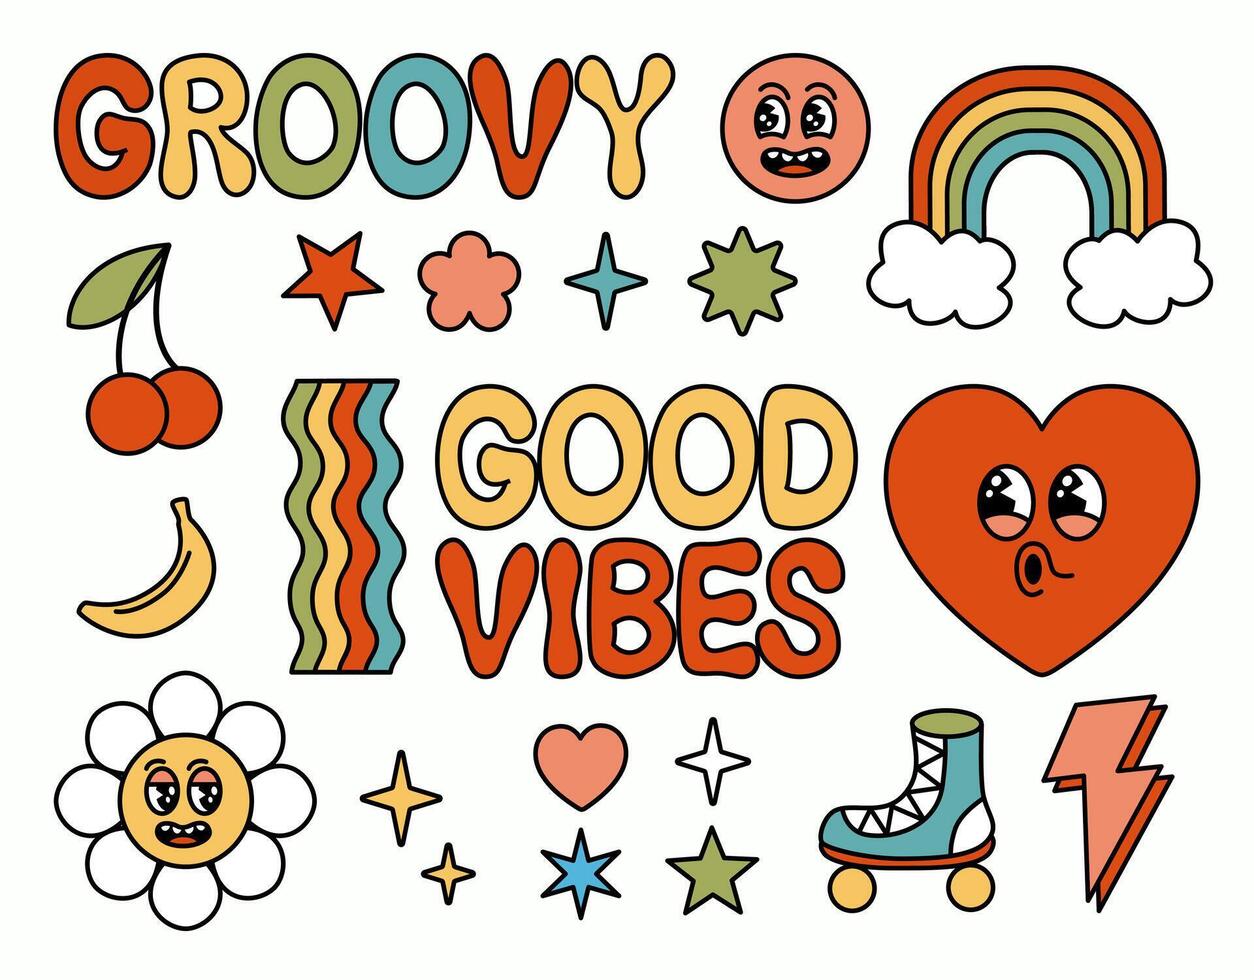 maravilloso retro hippie elementos colocar. dibujos animados flor, arcoíris, margarita, frutas, linda gracioso caras. bueno vibras. vector ilustración